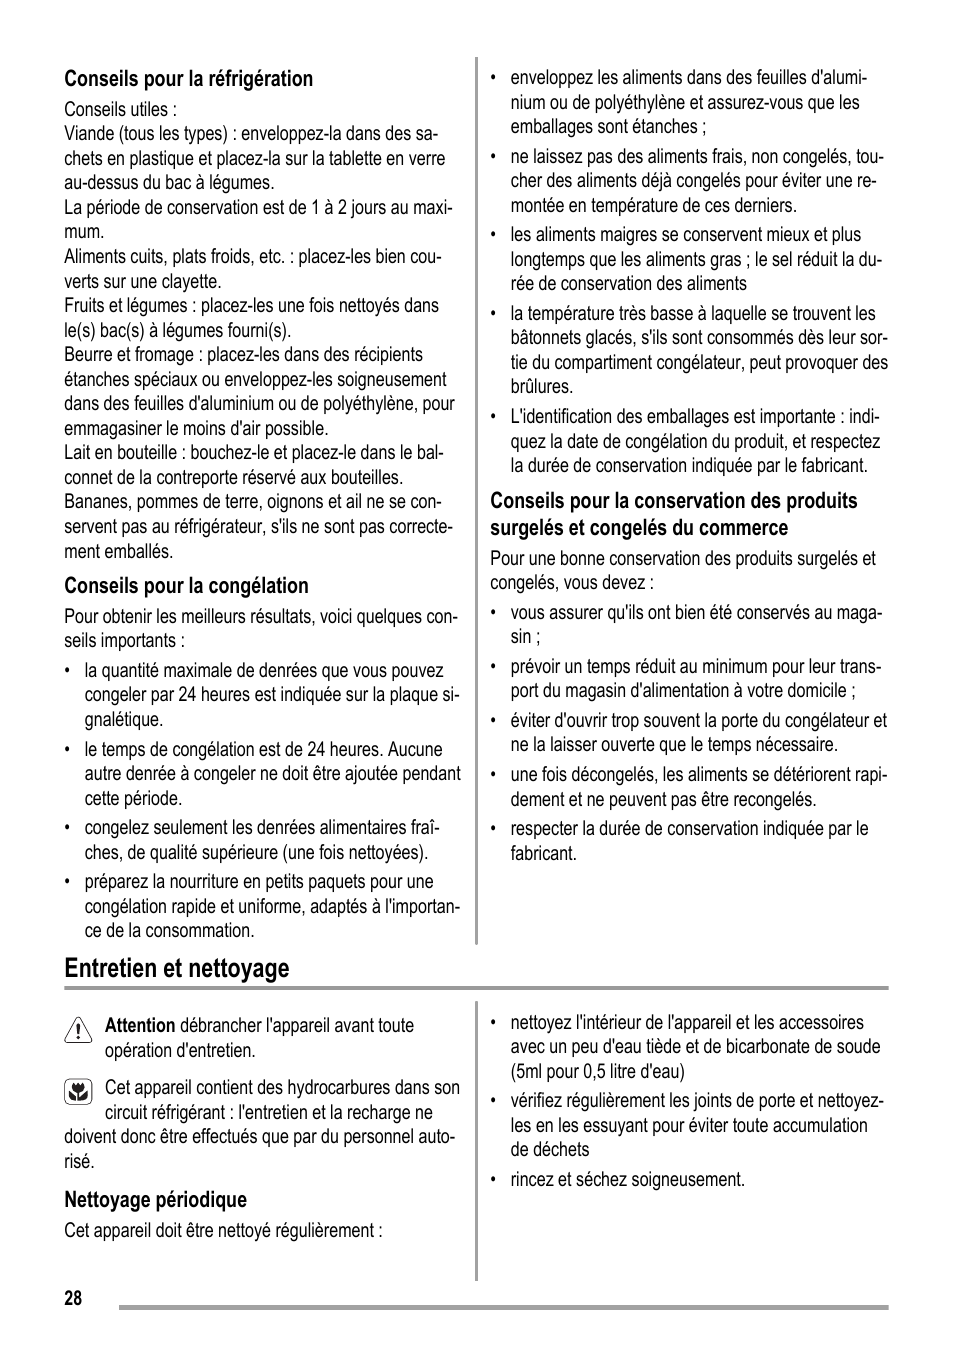 Entretien et nettoyage | ZANKER KBU 12401 DK User Manual | Page 28 / 48